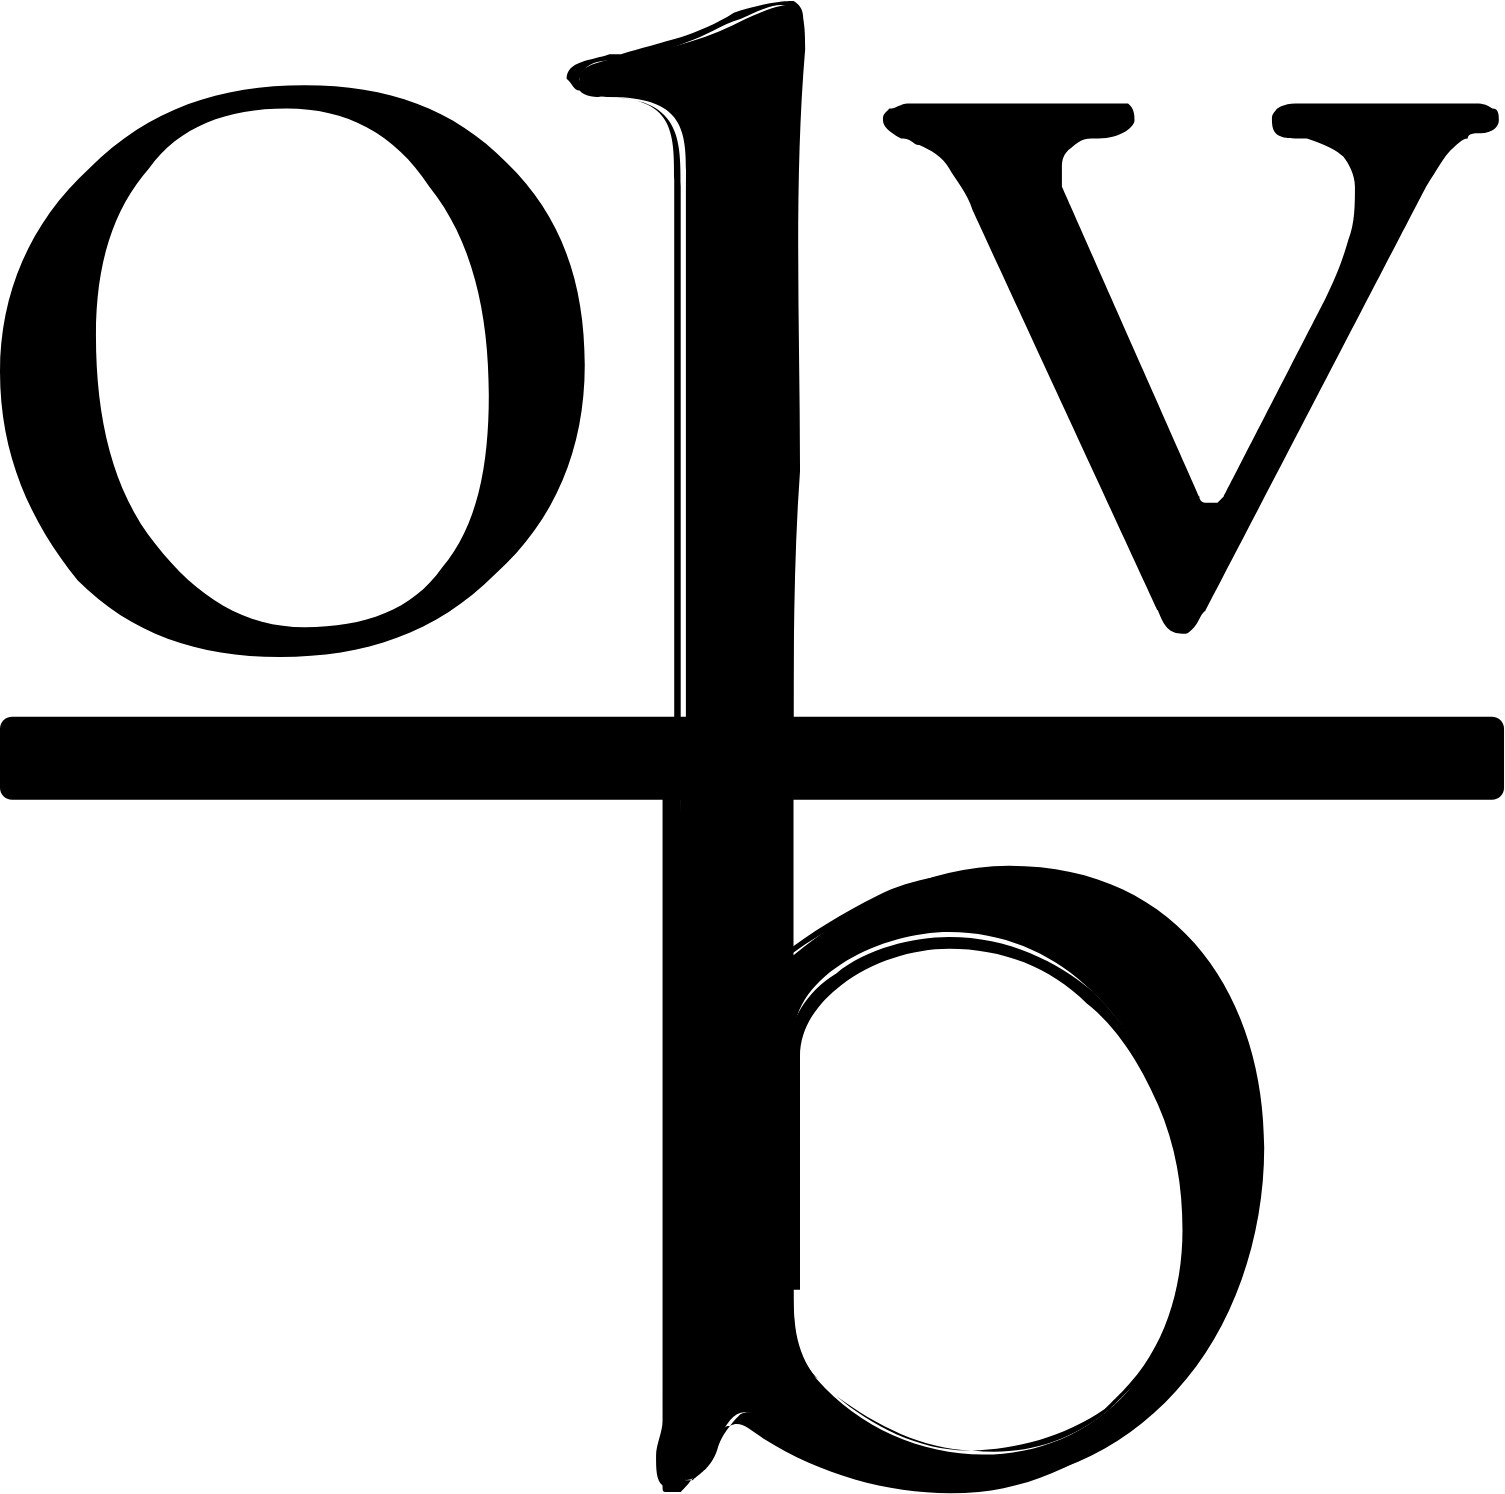 Ohio Valley Banc Corp logo (transparent PNG)